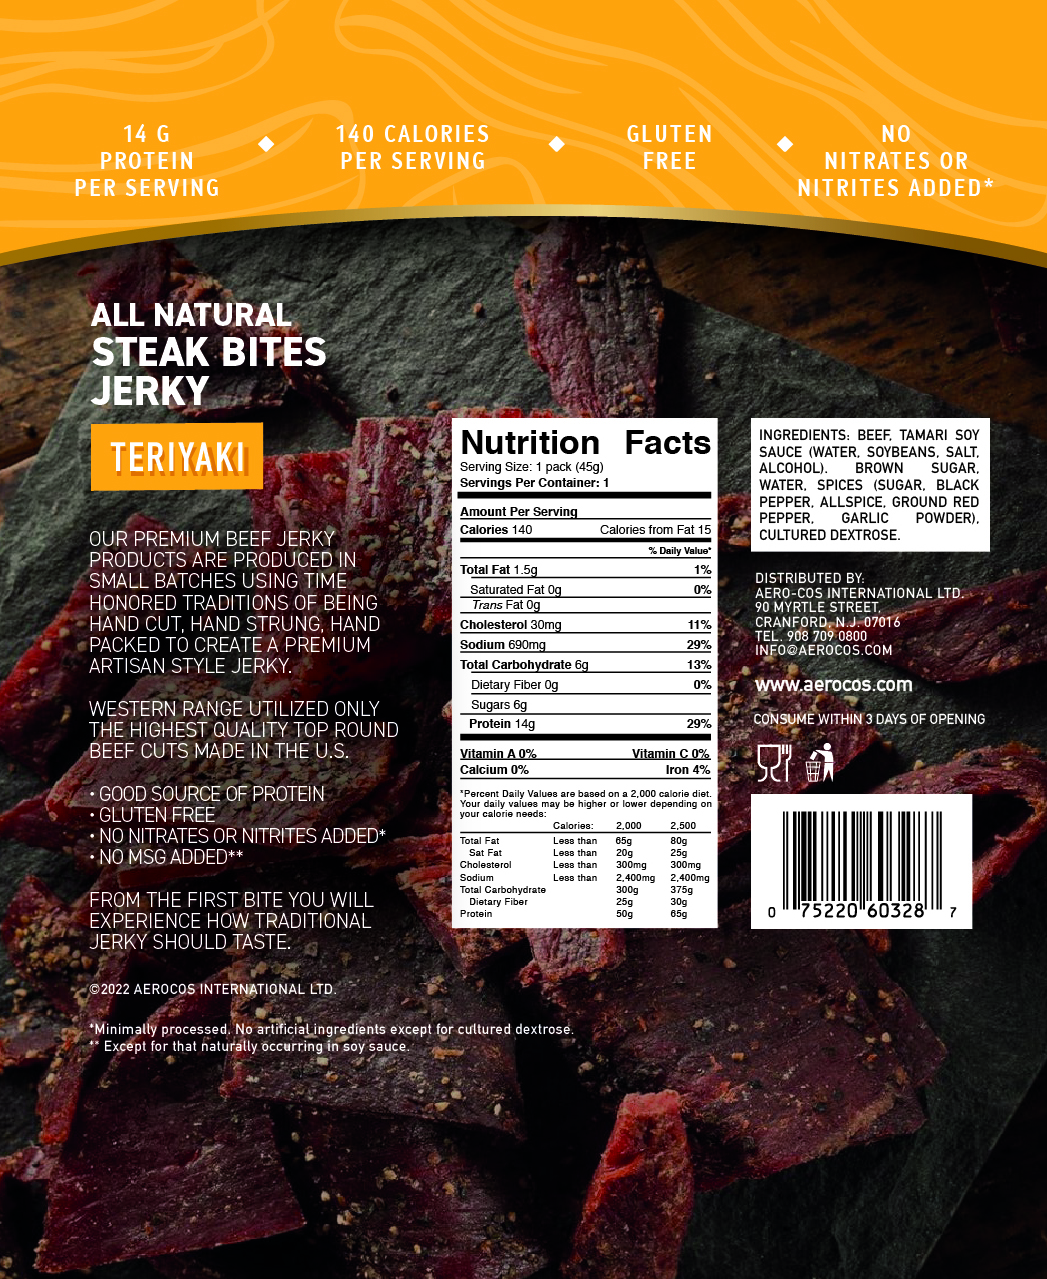 Western Range Beef Jerky Steak Bites - Teriyaki (Halal) 12 units per case 1.6 oz